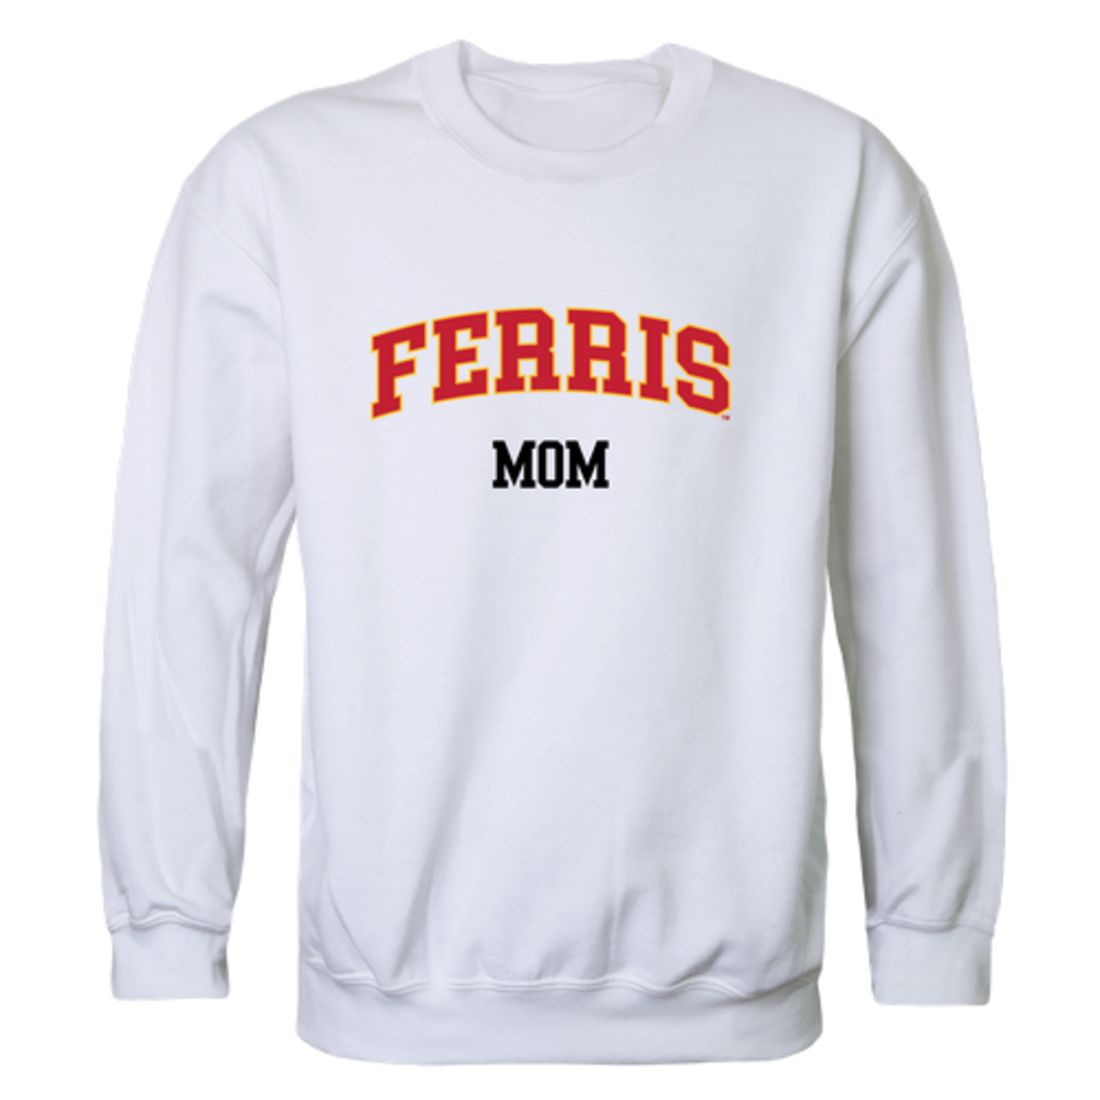 FSU Ferris State University Bulldogs Mom Fleece Crewneck Pullover Sweatshirt Heather Grey Small-Campus-Wardrobe